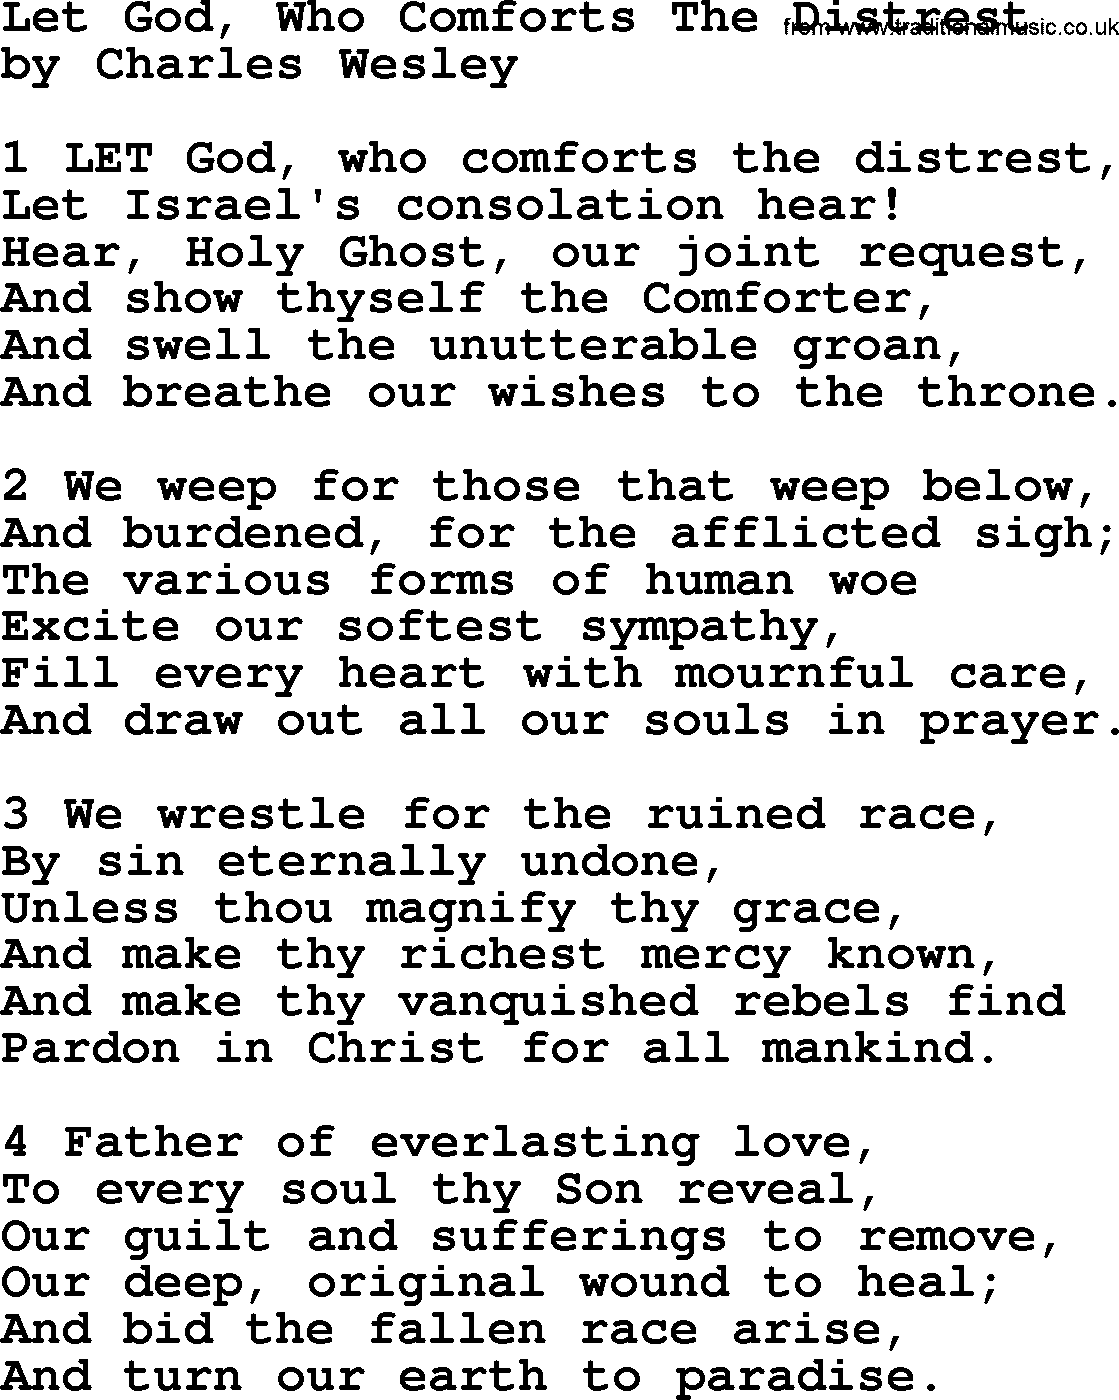 Charles Wesley hymn: Let God, Who Comforts The Distrest, lyrics